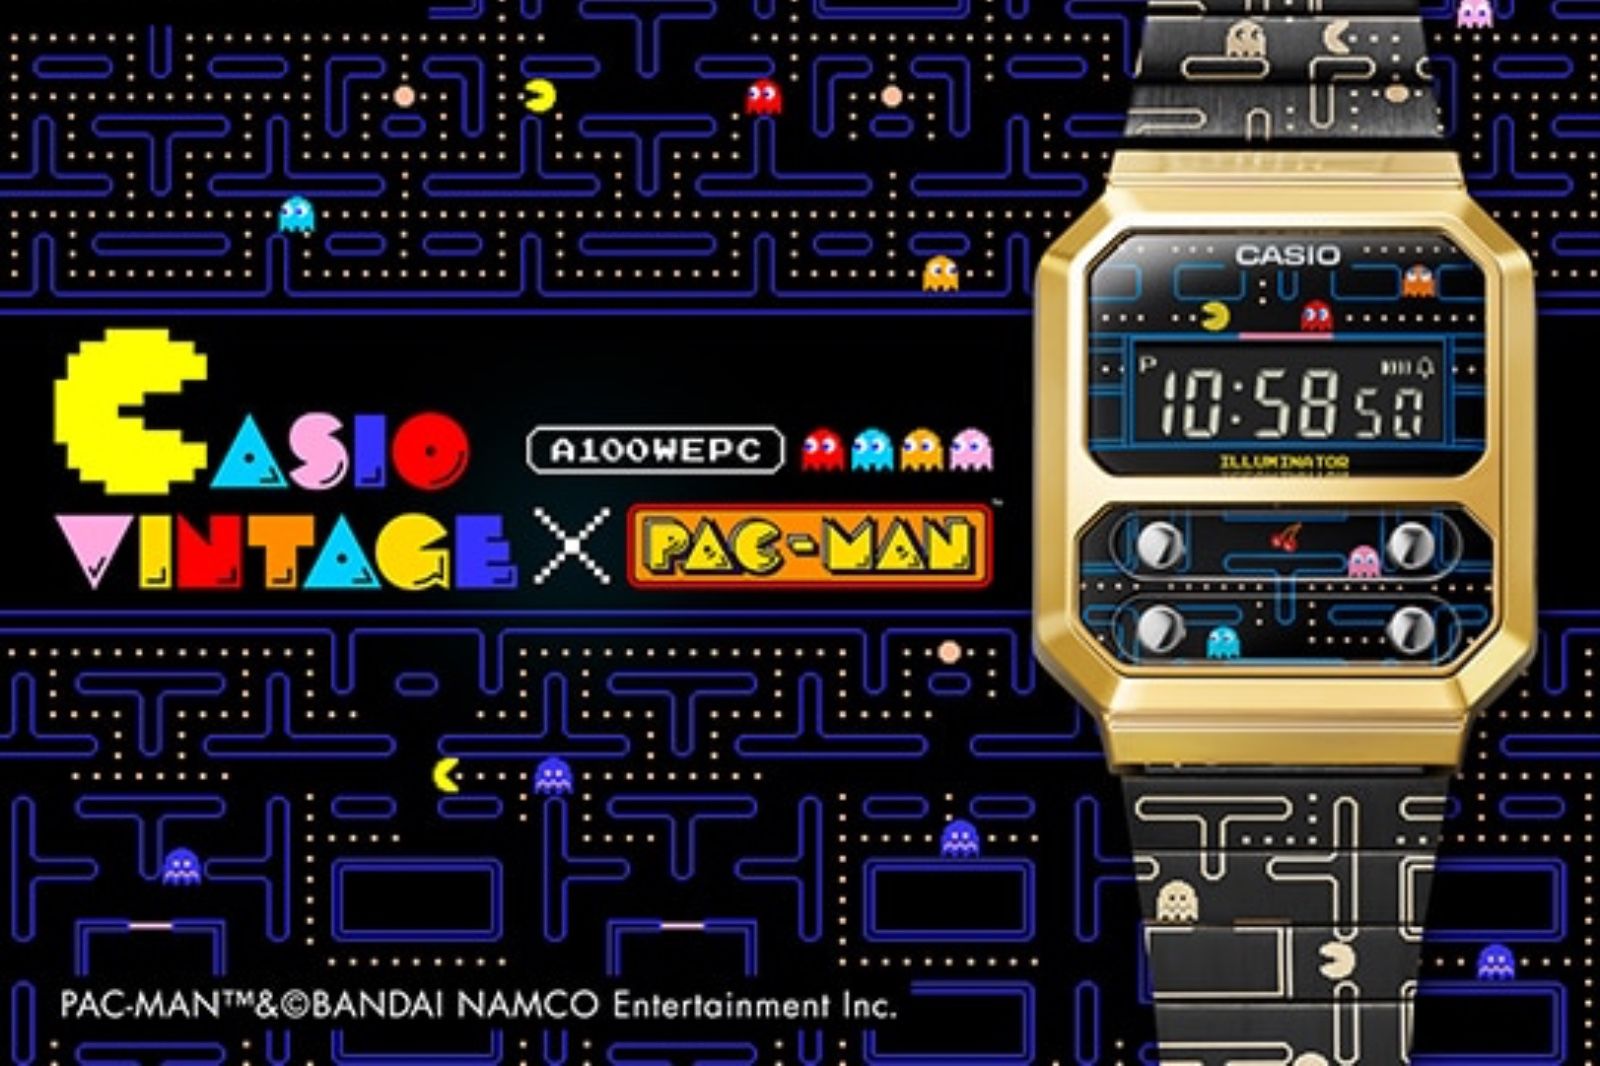 Casio announces Pac-Man edition F-100 digital watch photo 1